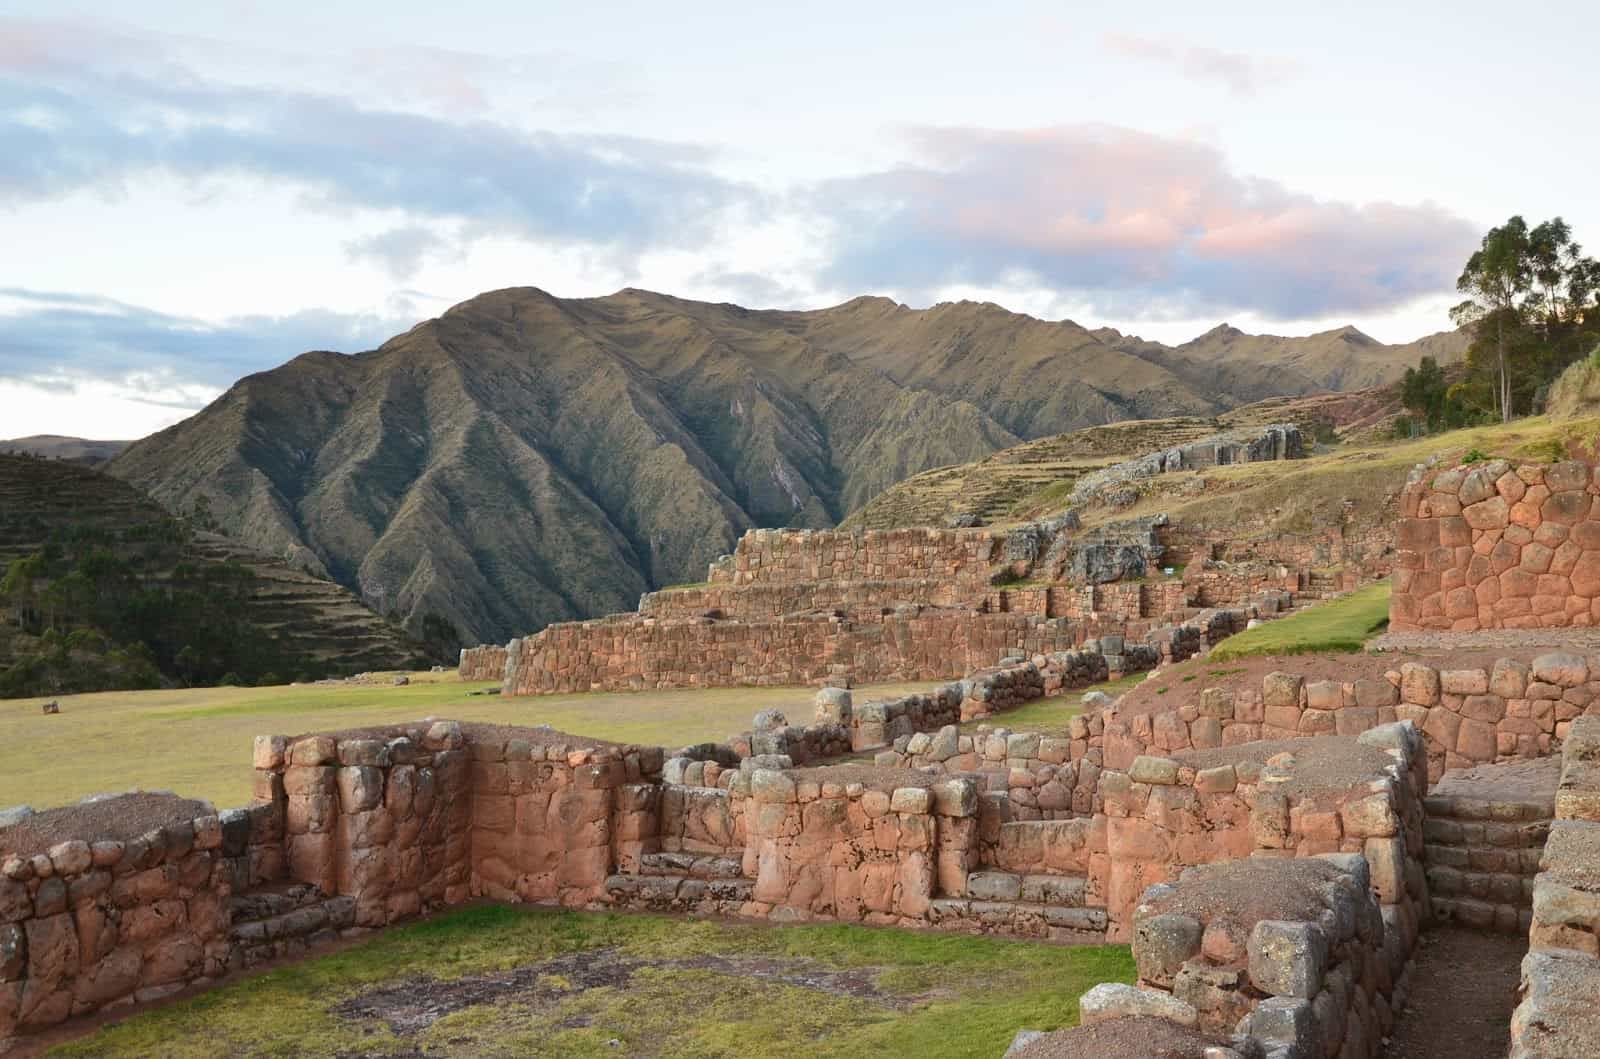 Ruins of the palace of Inca ruler Tupac Yupanqui in Chinchero, Peru